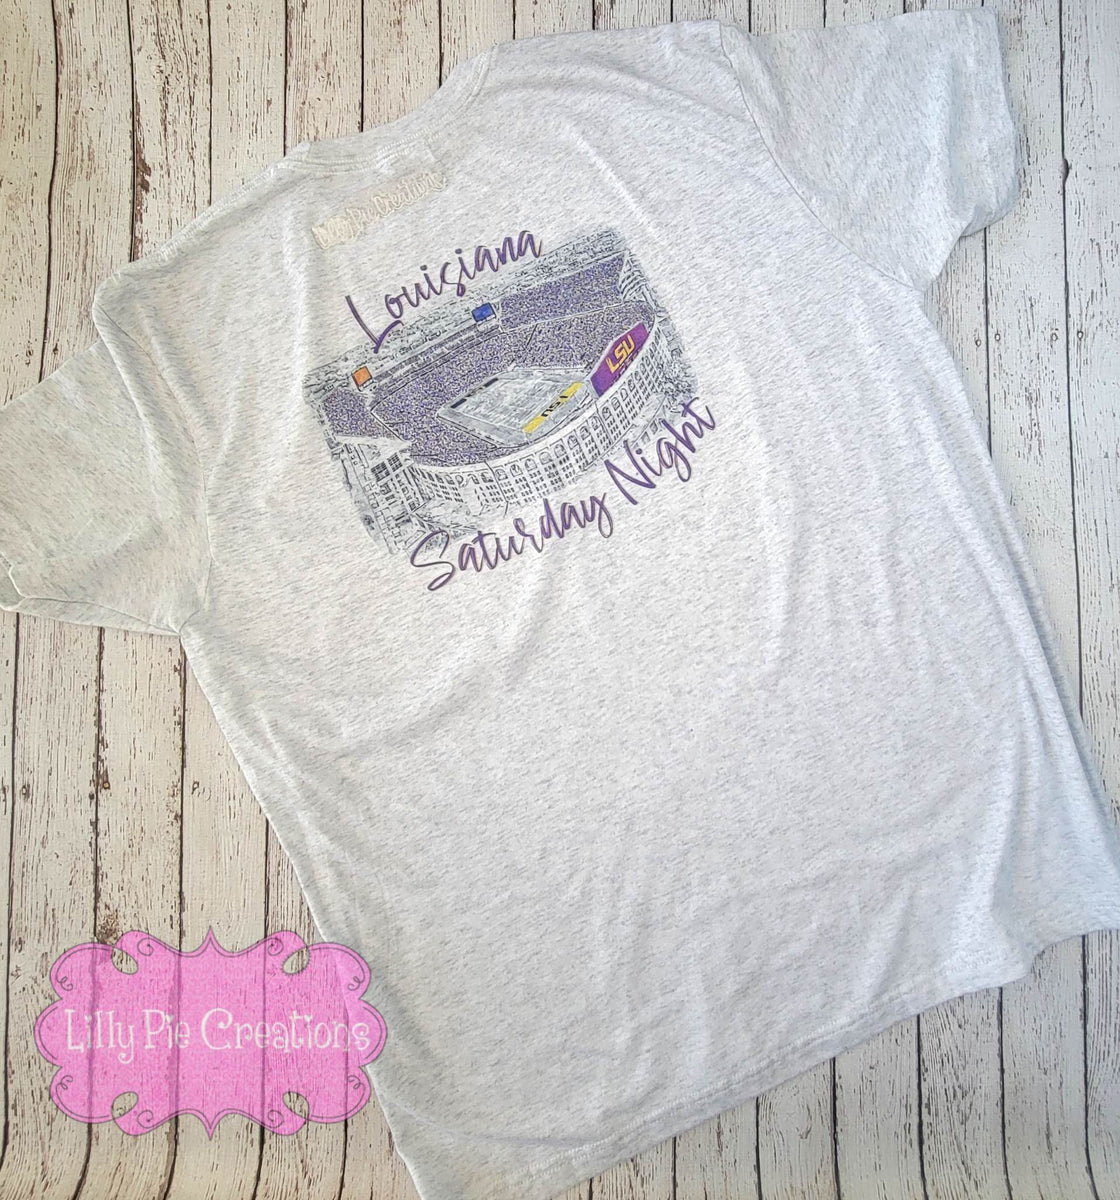 KreweAriadne Louisiana Saturday Night, Louisiana Shirt, Love Louisiana, Unisex, Soft Bella+Canvas3001 T-Shirt